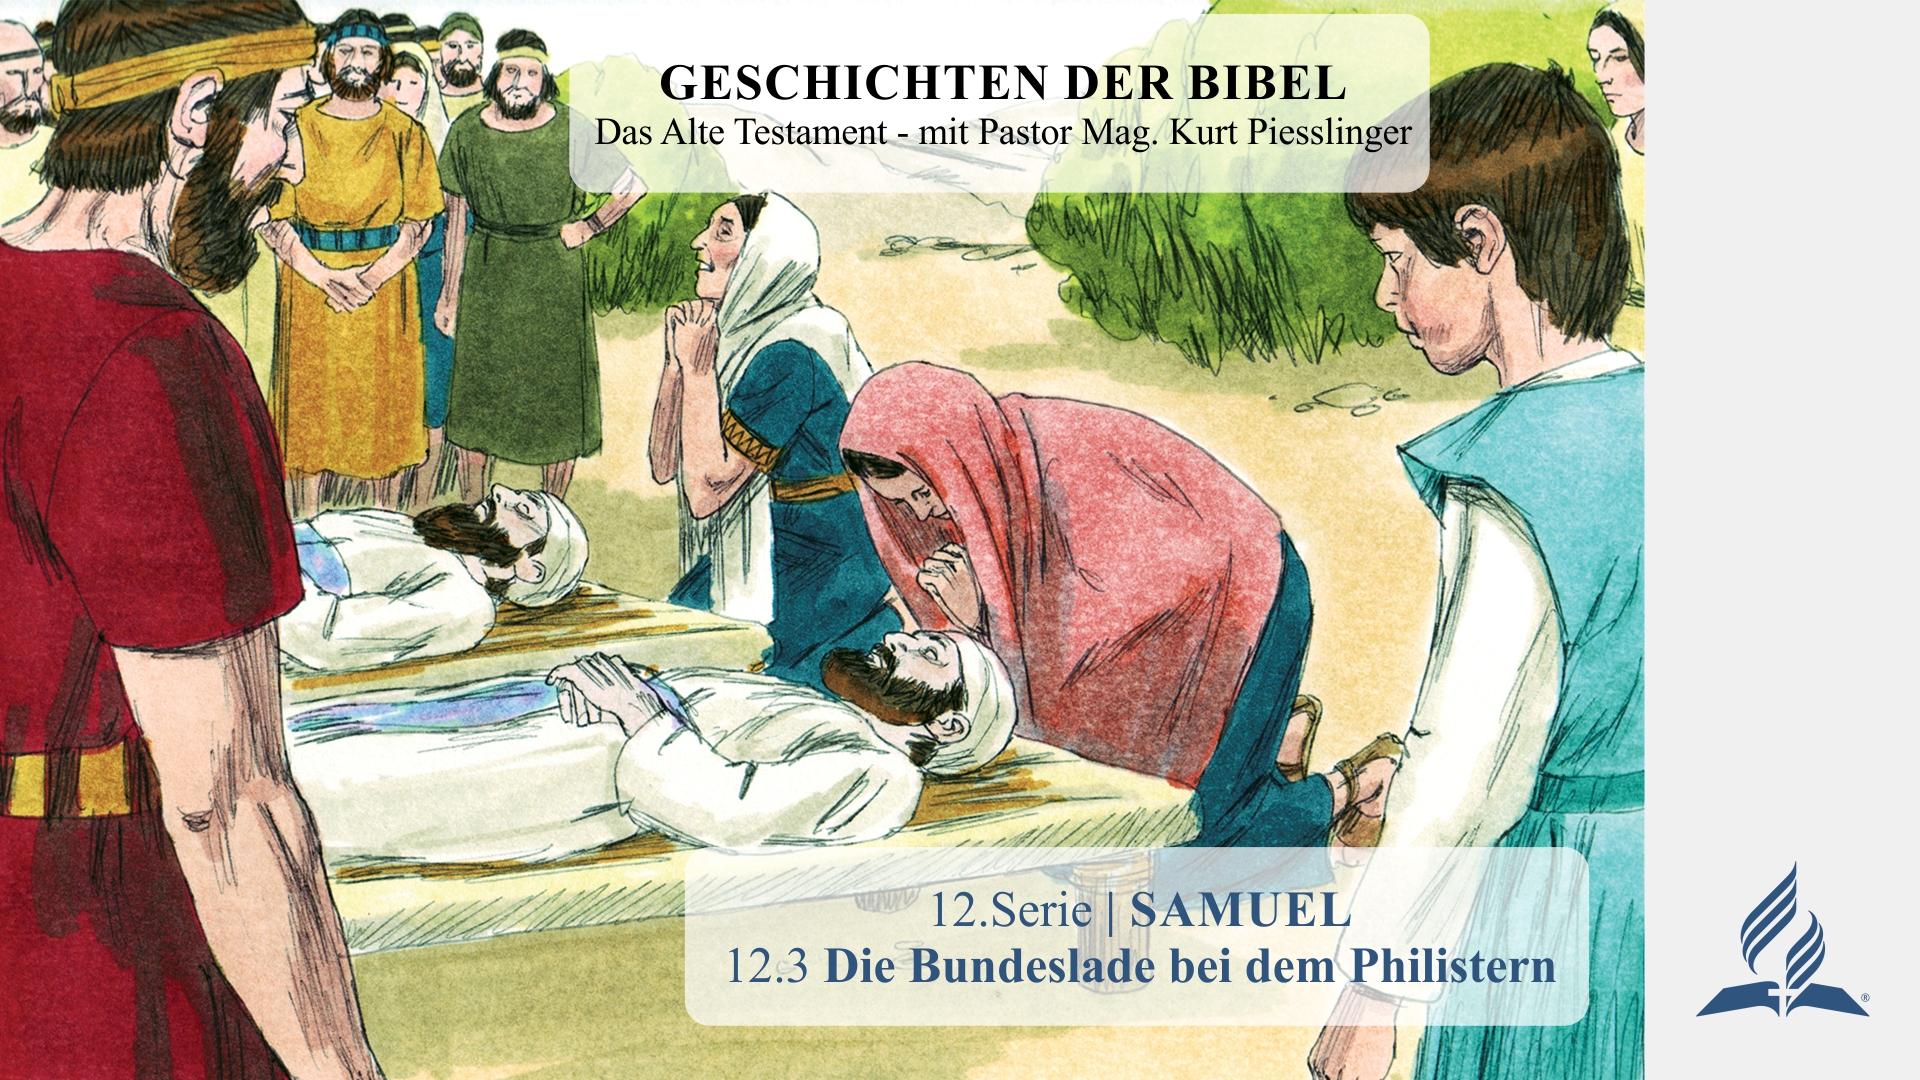 GESCHICHTEN DER BIBEL: 12.3 Die Bundeslade bei dem Philistern – 12.SAMUEL | Pastor Mag. Kurt Piesslinger